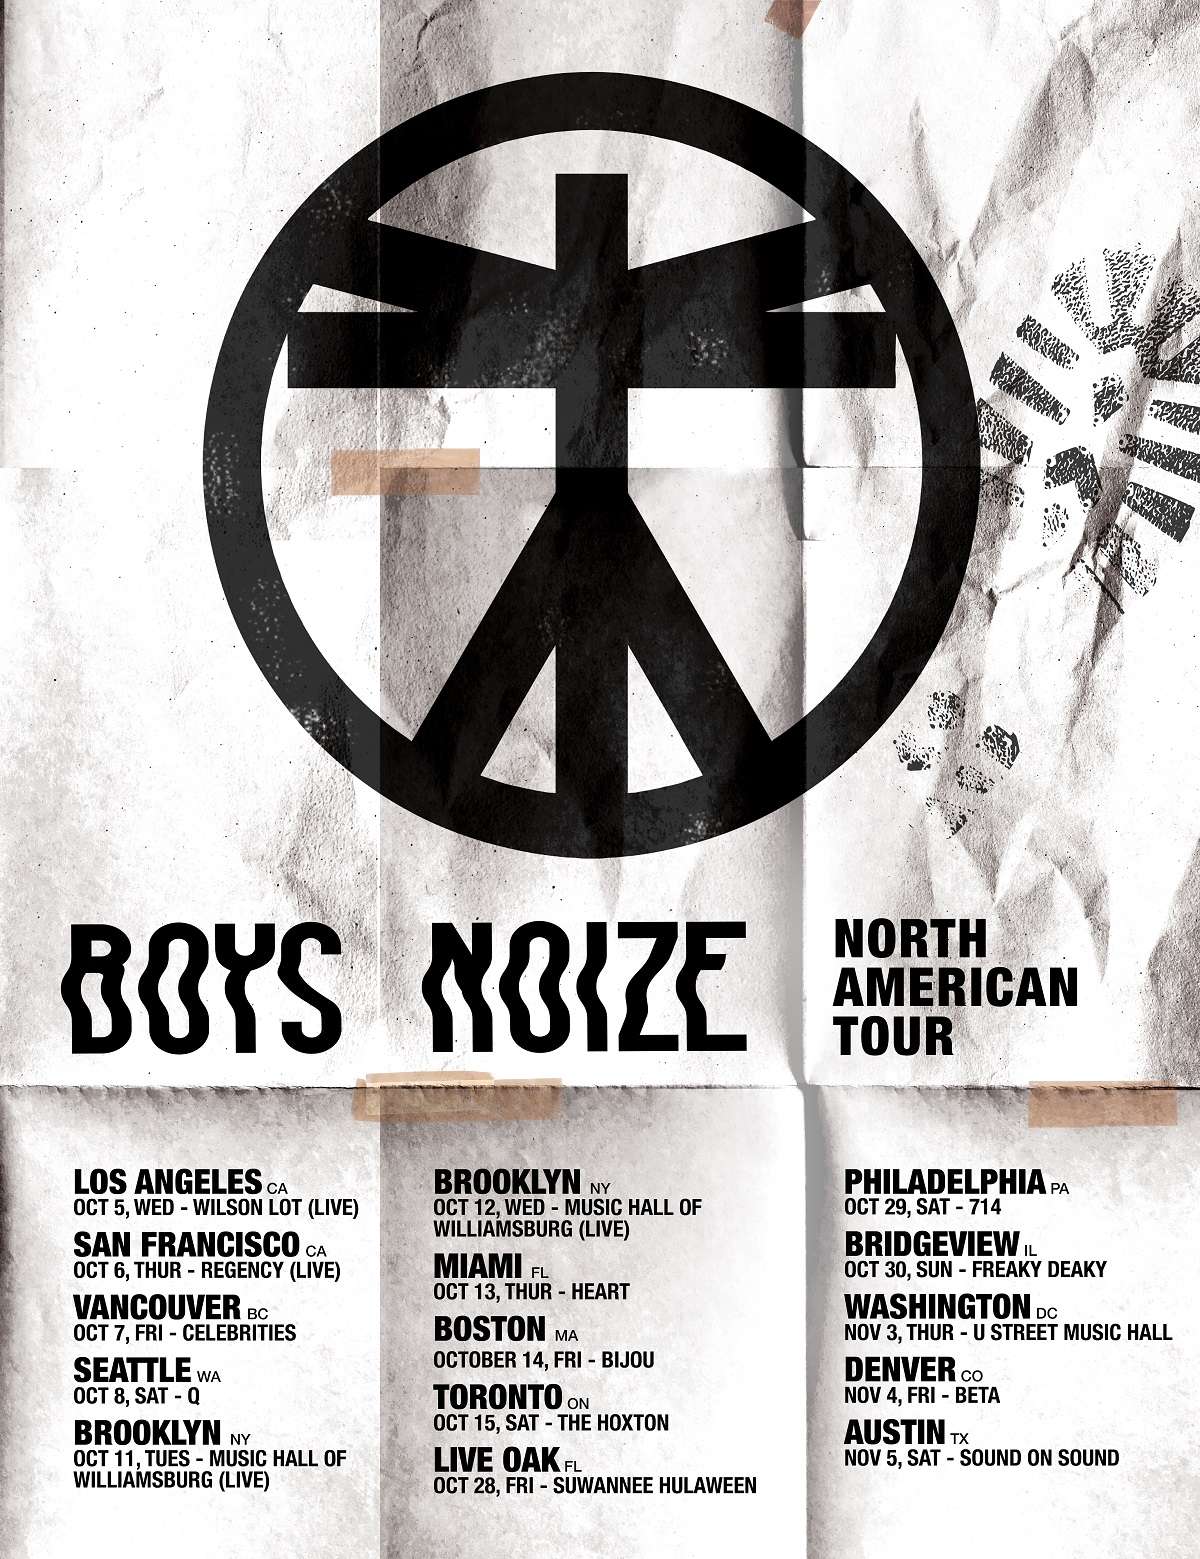 Boys Noize - Tour poster layered (1)